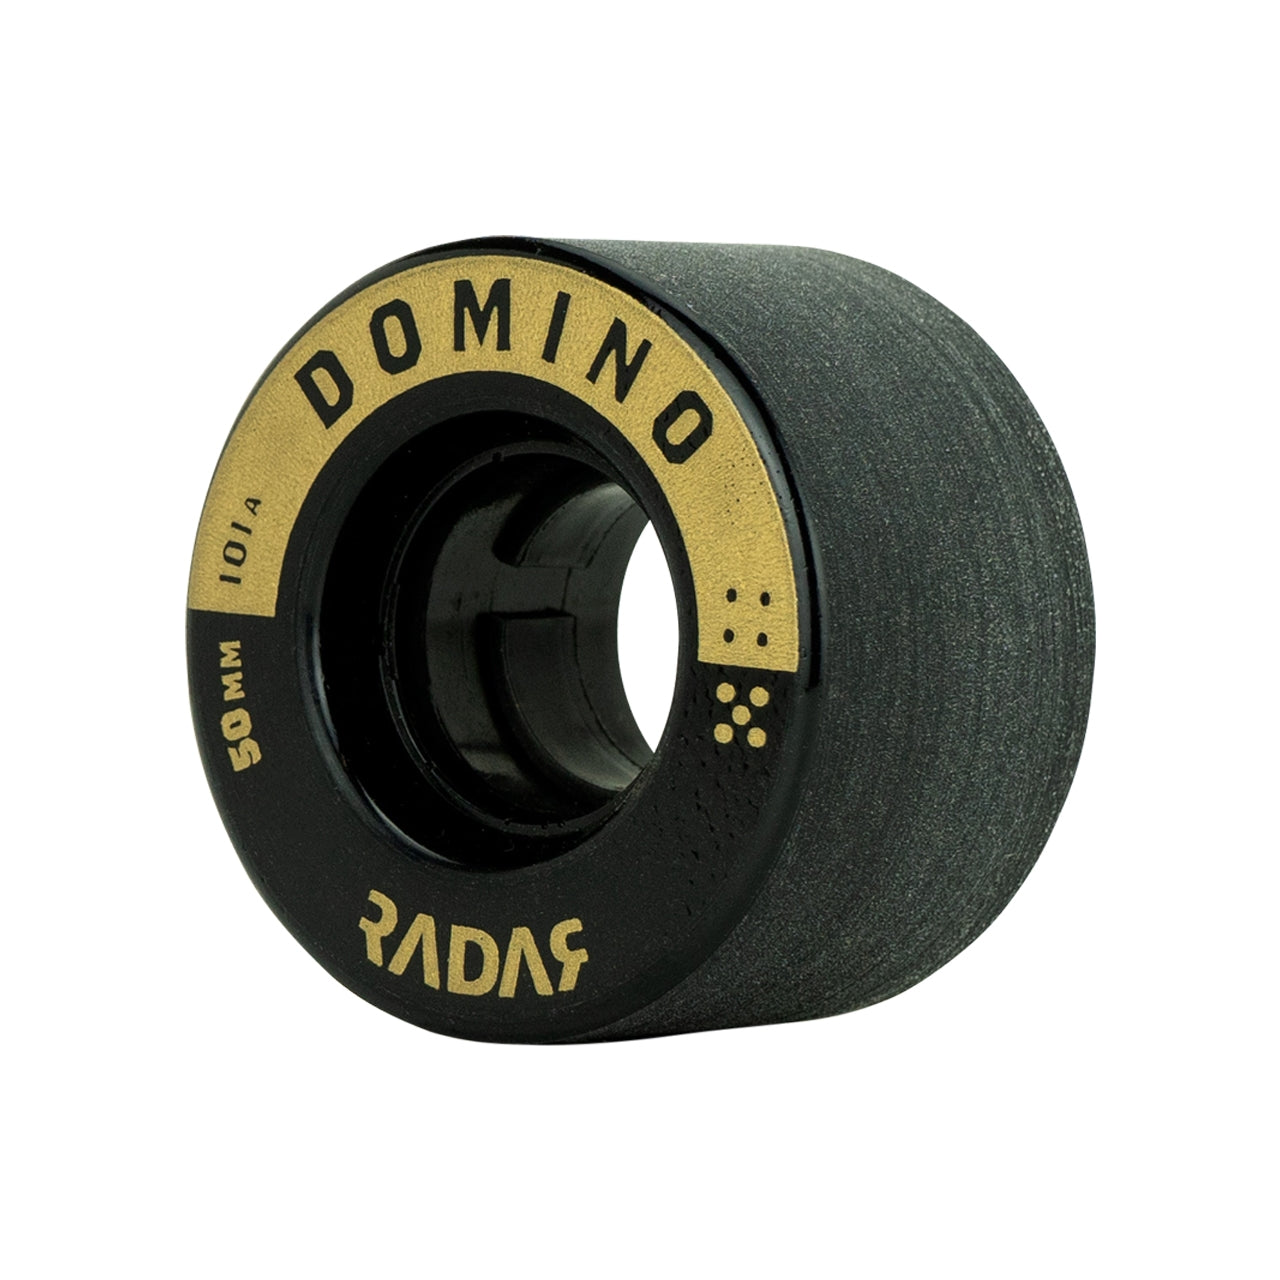 Roues Radar Domino Noir/Or 50 mm 101a - Lot de 4